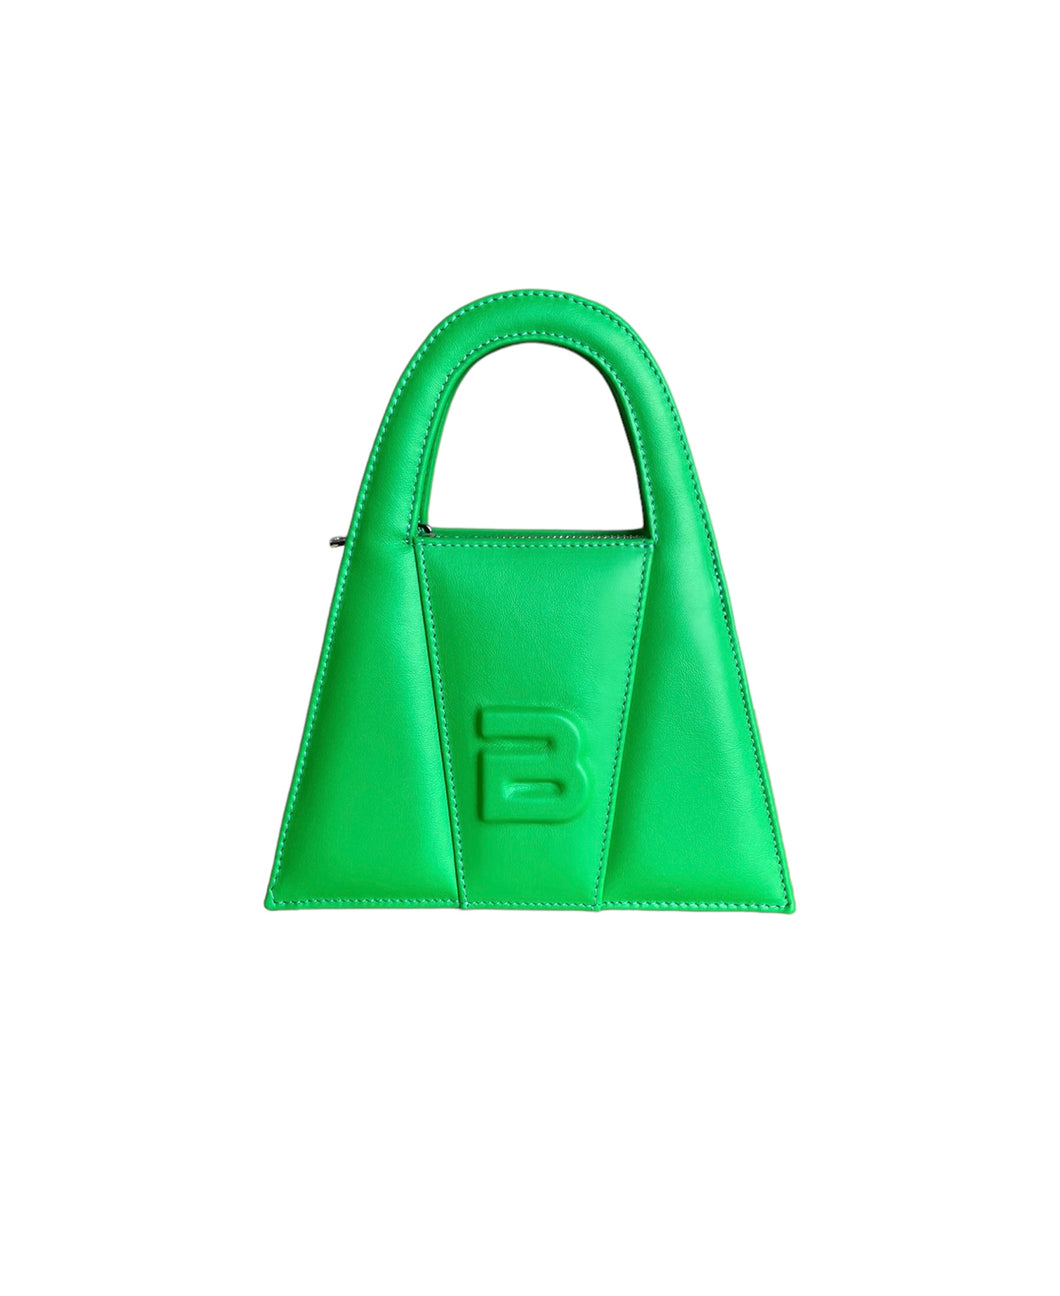 Lime Green Leather Minie Lock Bag